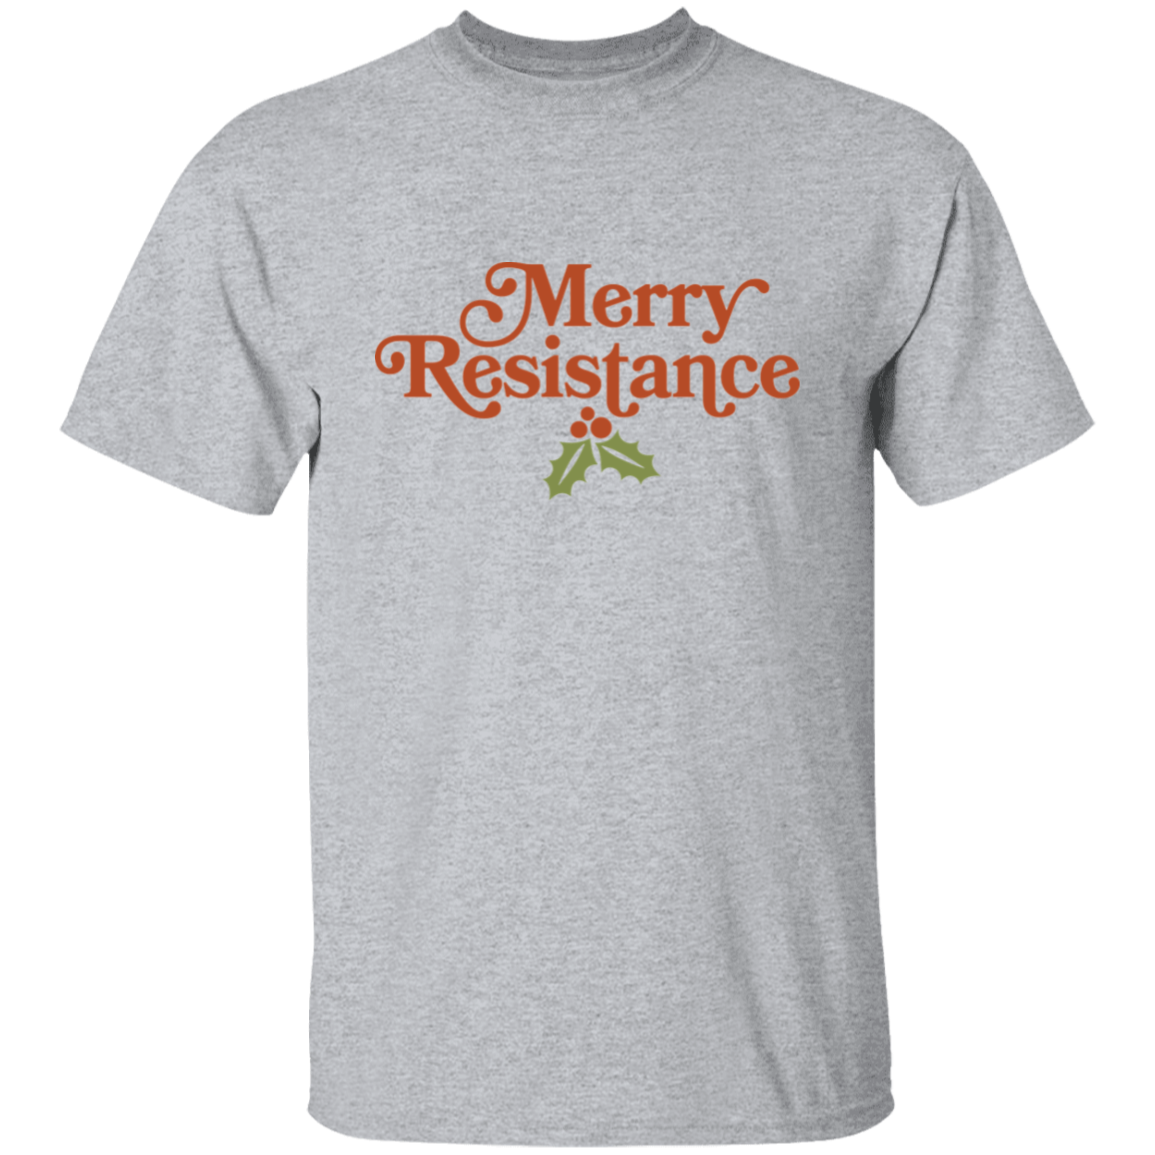 Merry Resistance T-Shirt